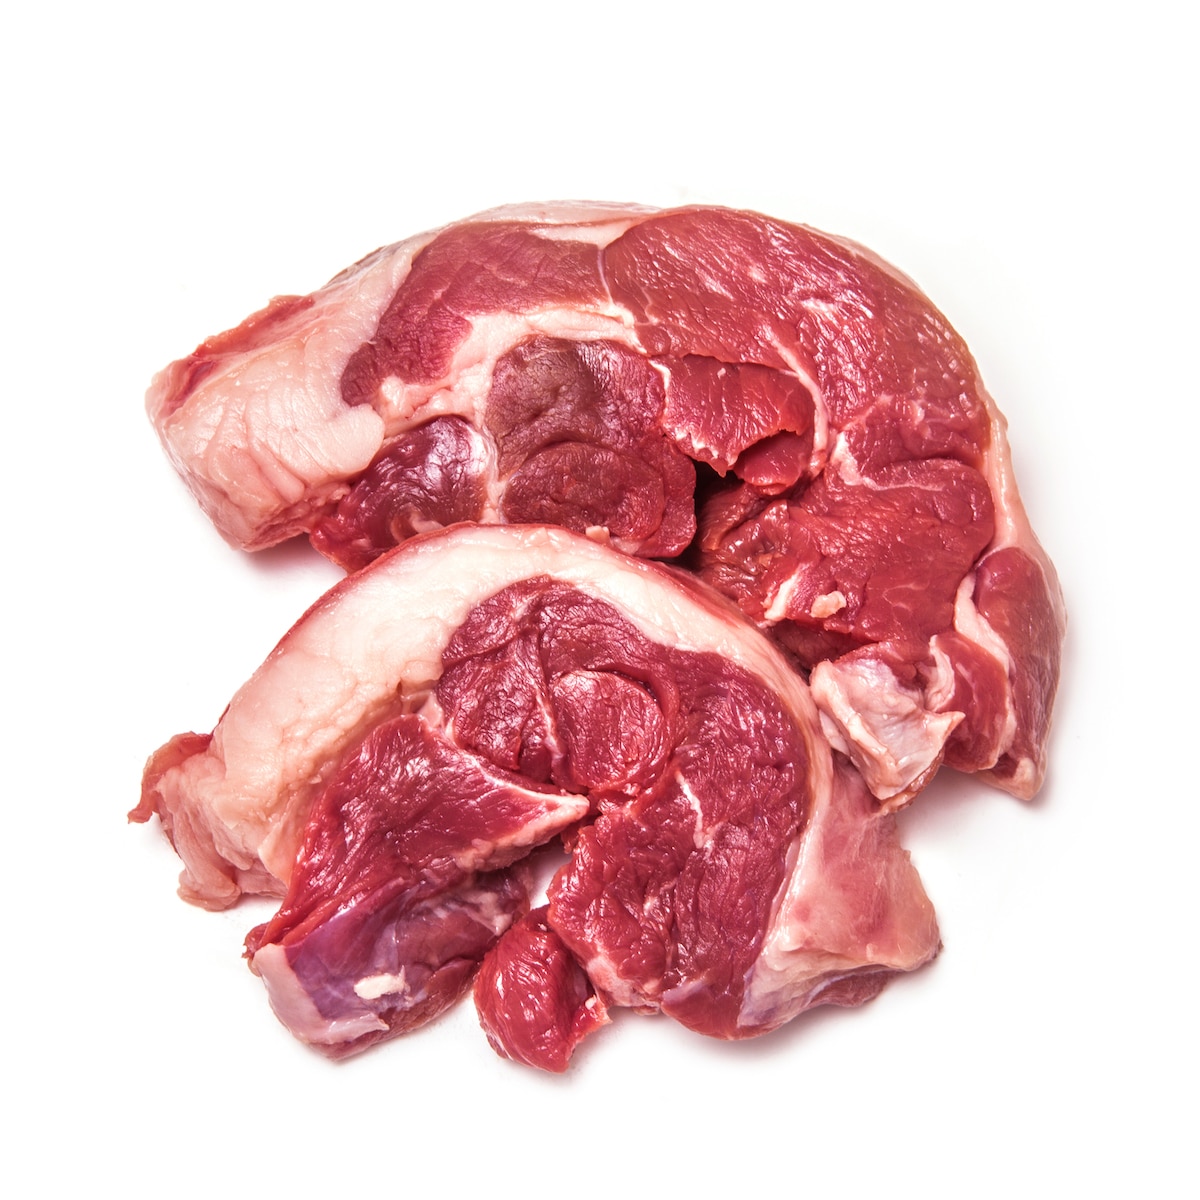 Raw goat leg steaks on a plain white background